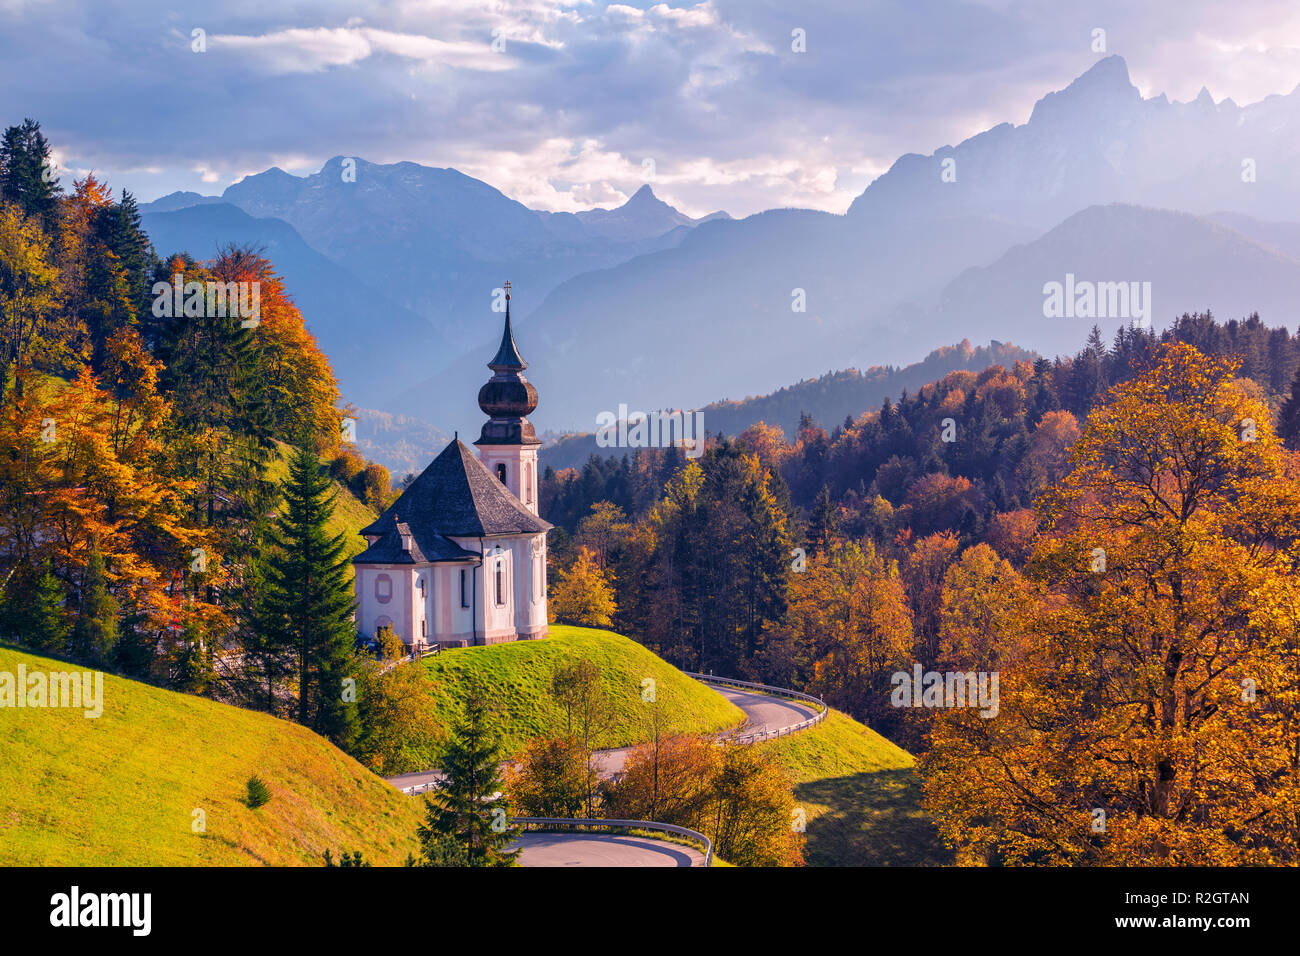 Autumn in Alps. Image of the Bavarian Alps with Maria Gern Church and Watzmann mountain during beautiful autumn sunset. Stock Photo